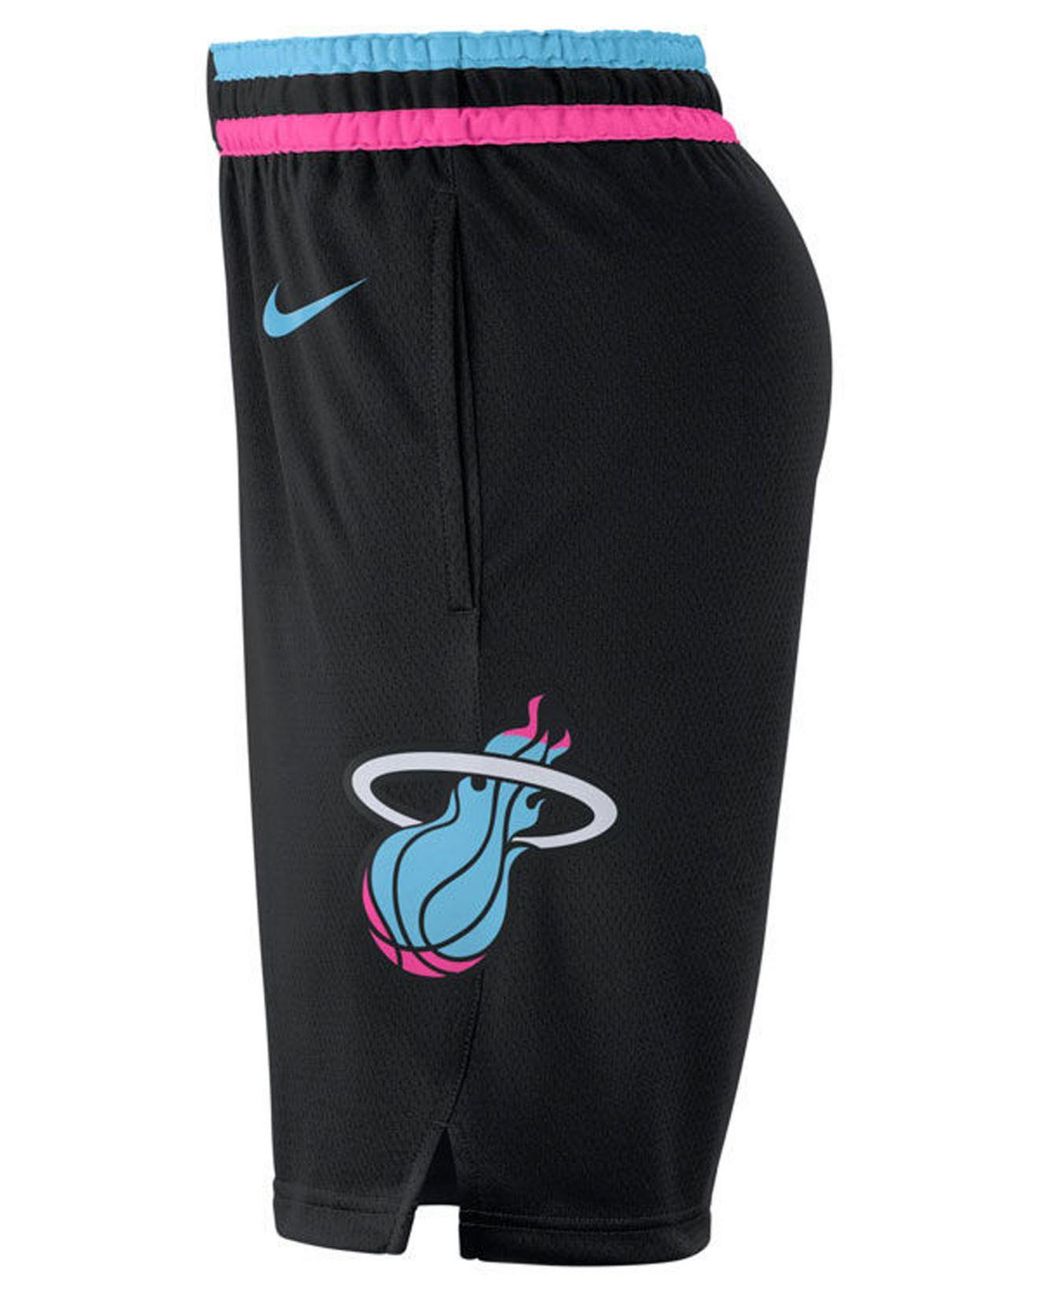 Nike Basketball NBA Miami Heat swingman shorts in pink/blue